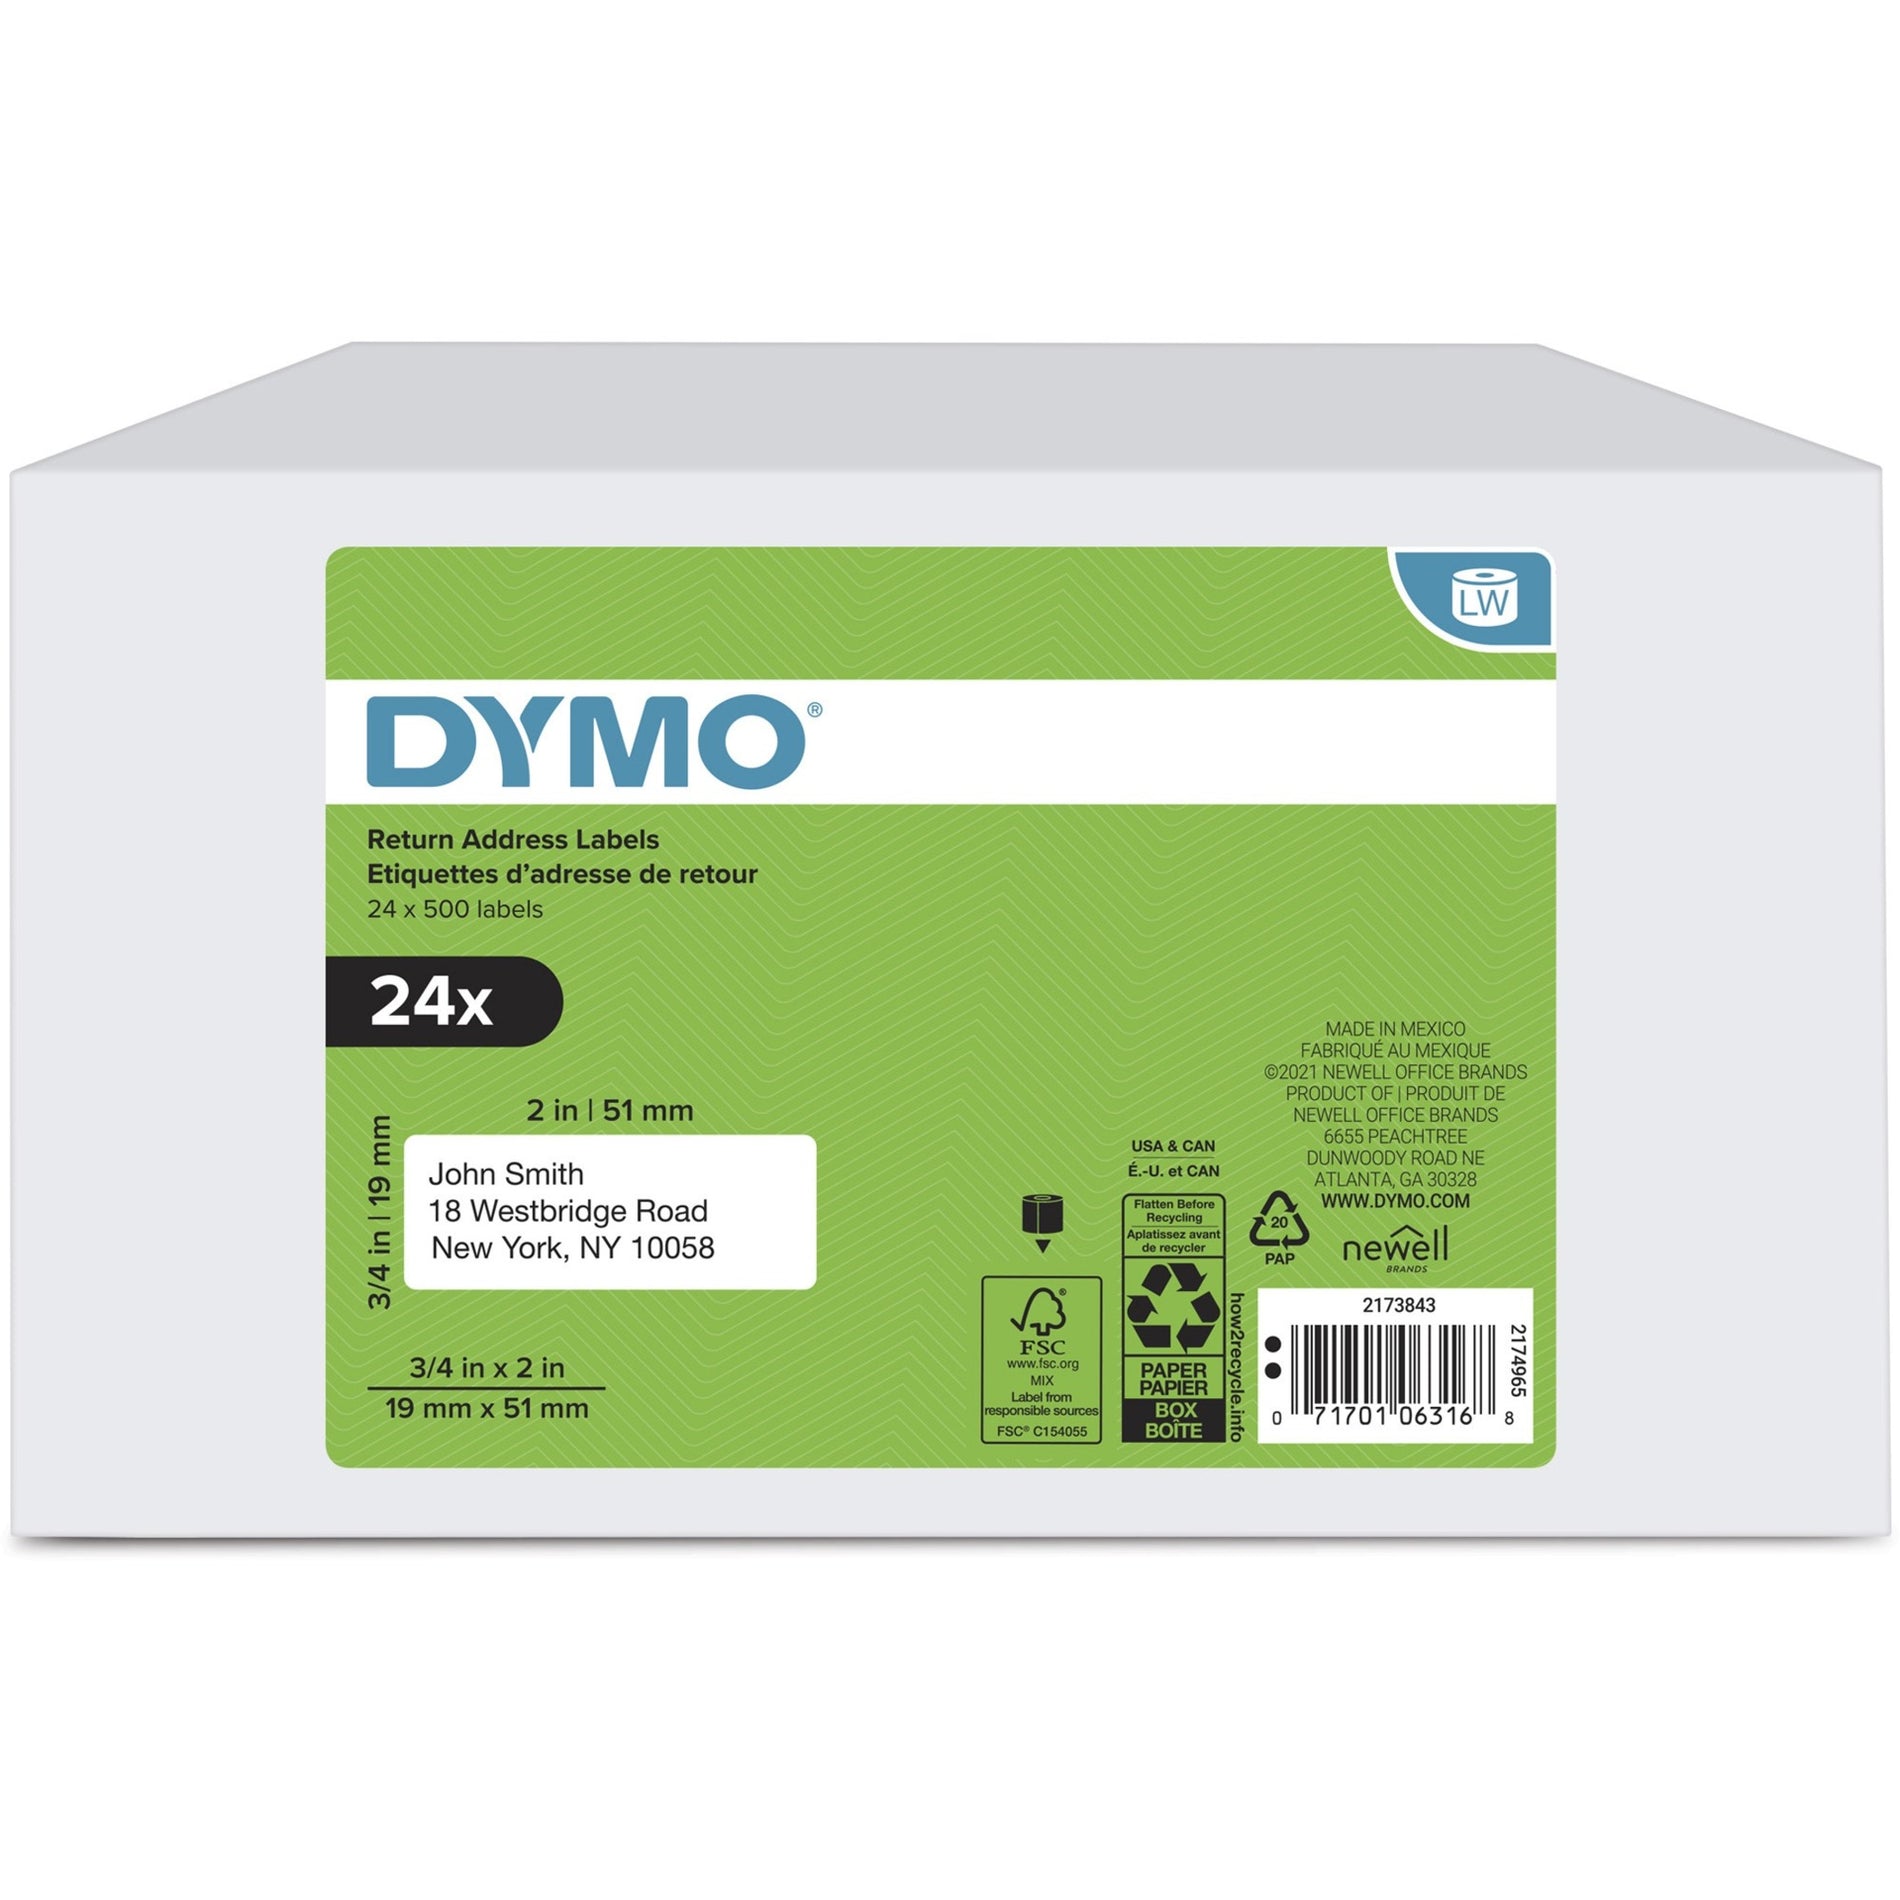 Dymo 2173843 Return Address Multipurpose Labels, Self-adhesive, 3/4" x 2", 500 Labels per Roll, White